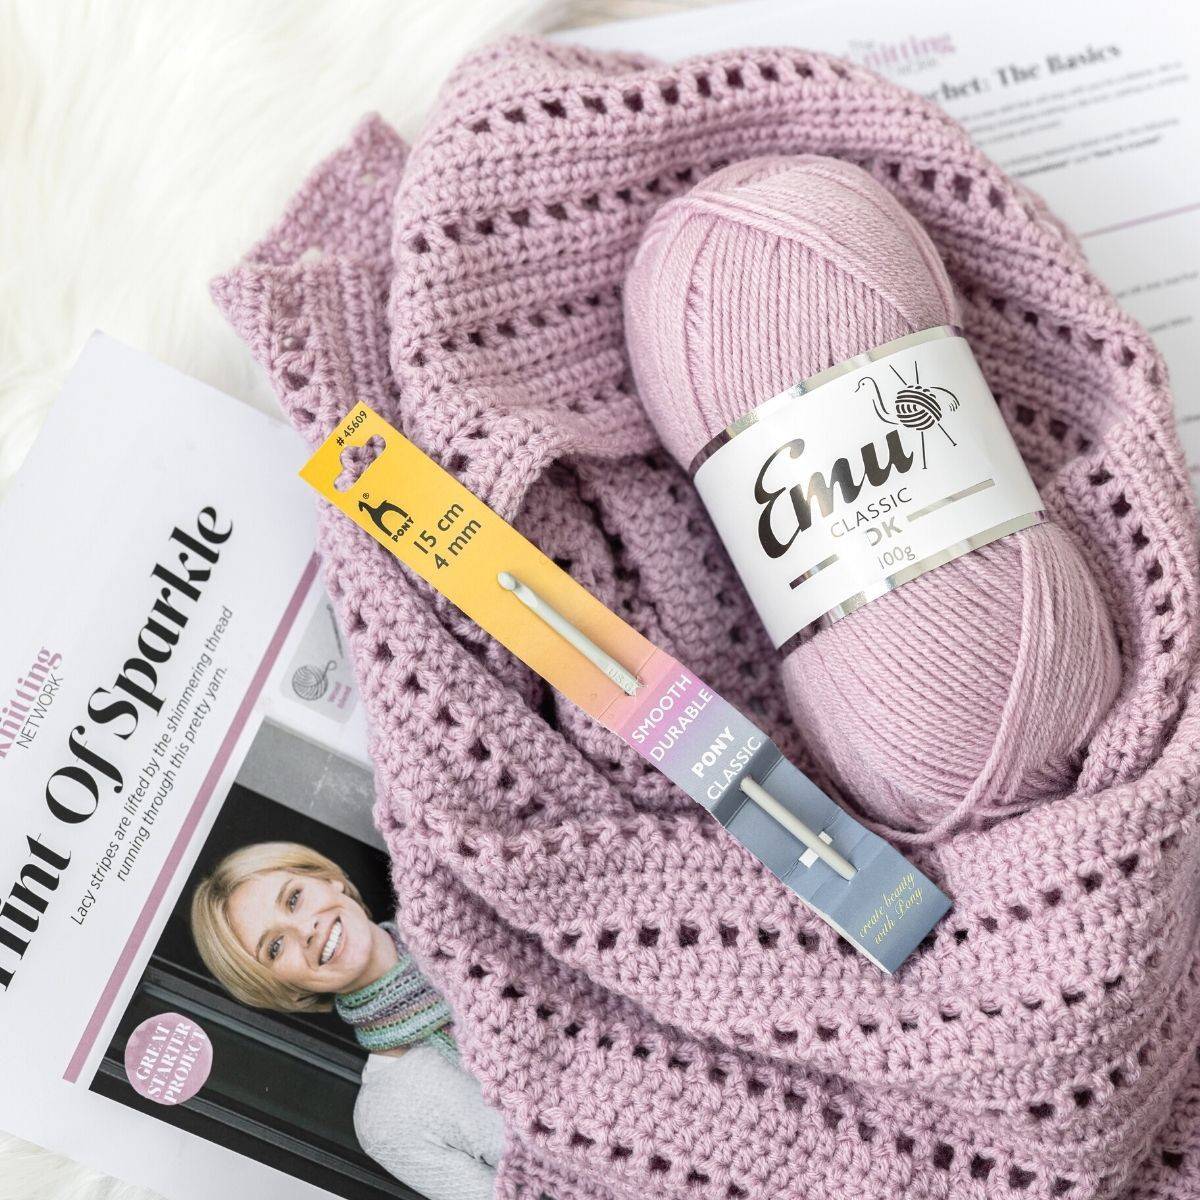 Beginner Crochet. – This is Knit